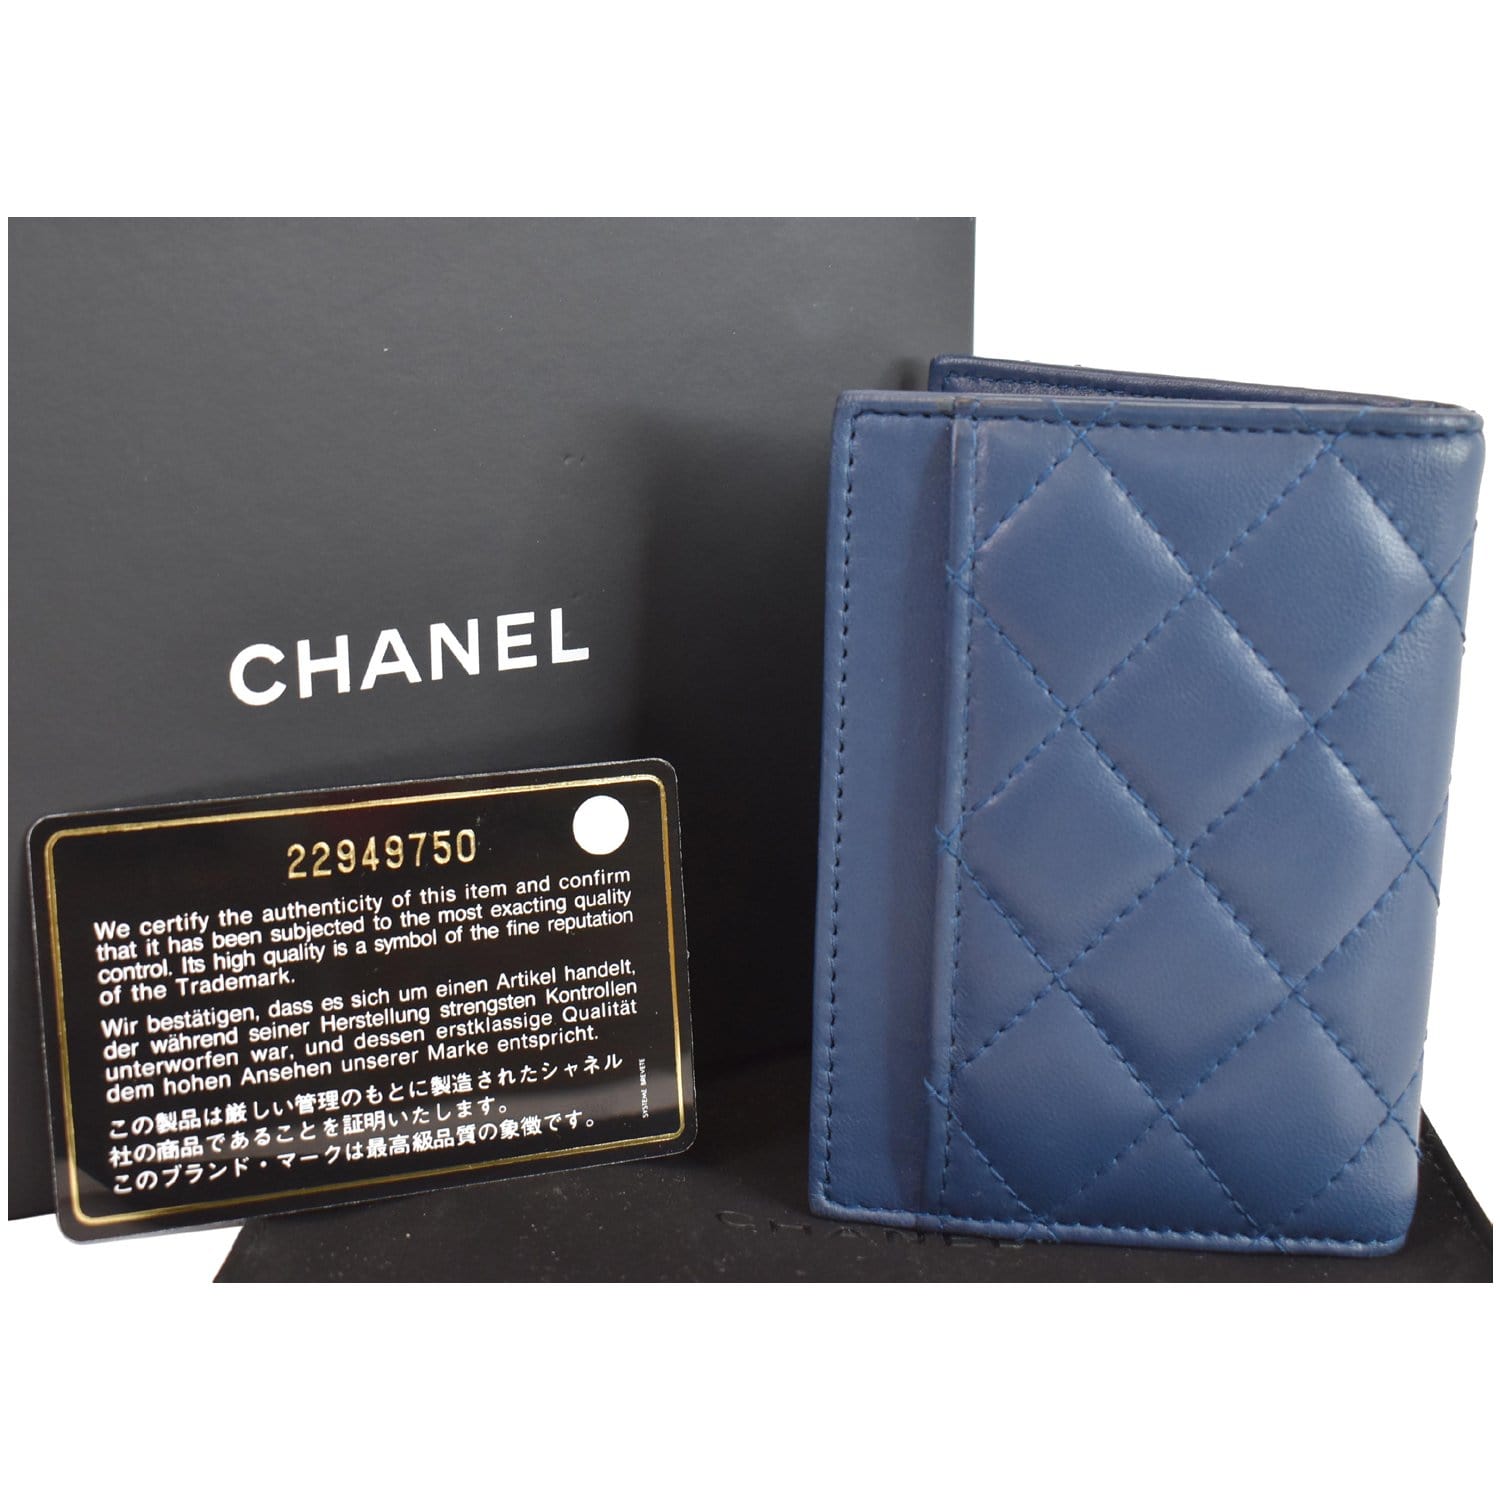 Chanel Passport holder 